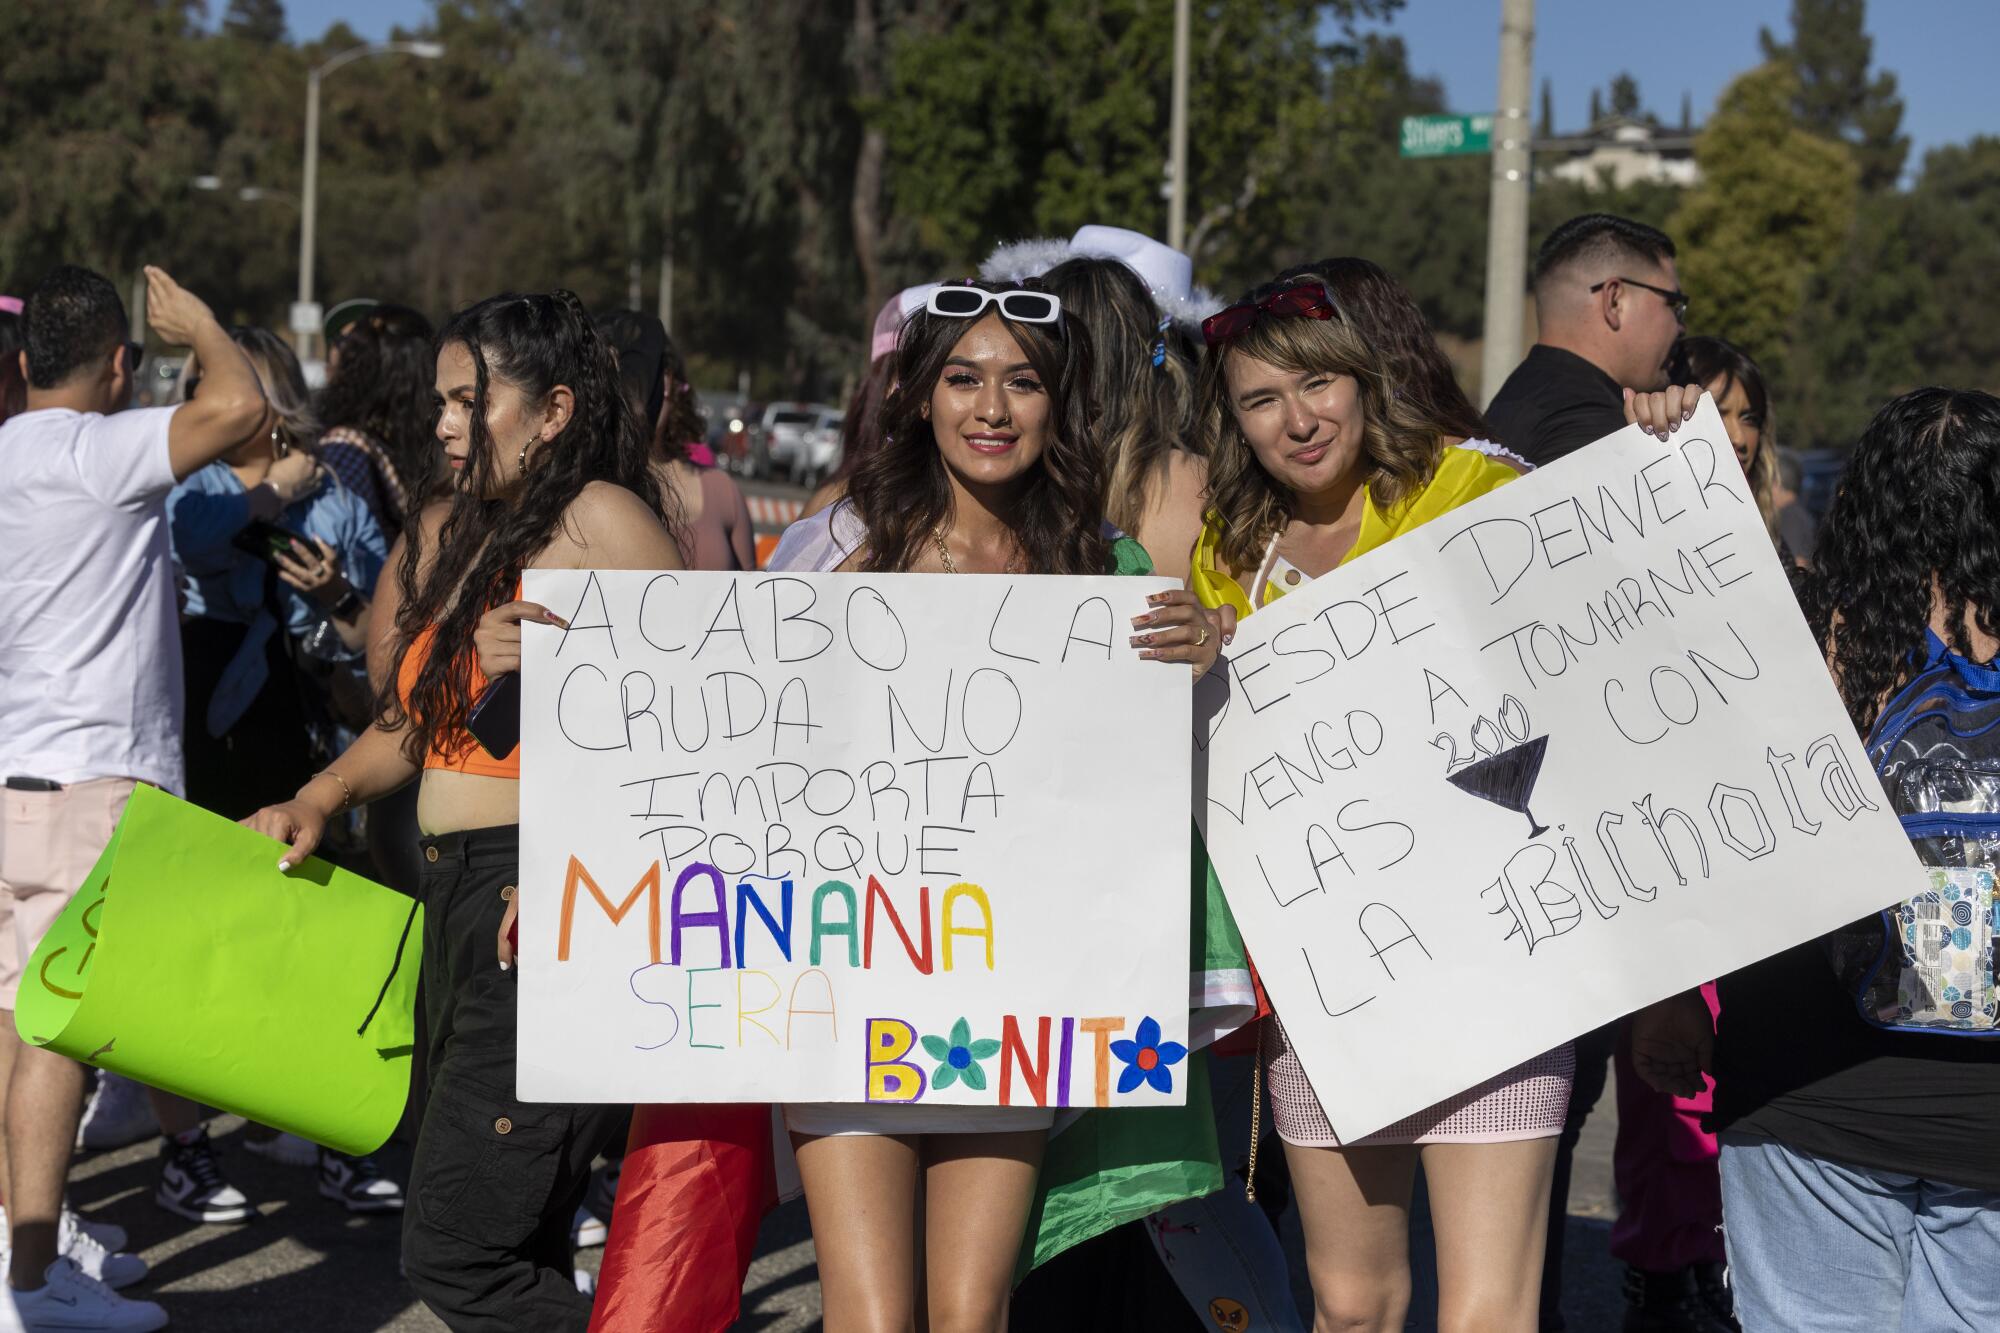 How Karol G's tour is helping fans heal heartbreak Los Angeles Times